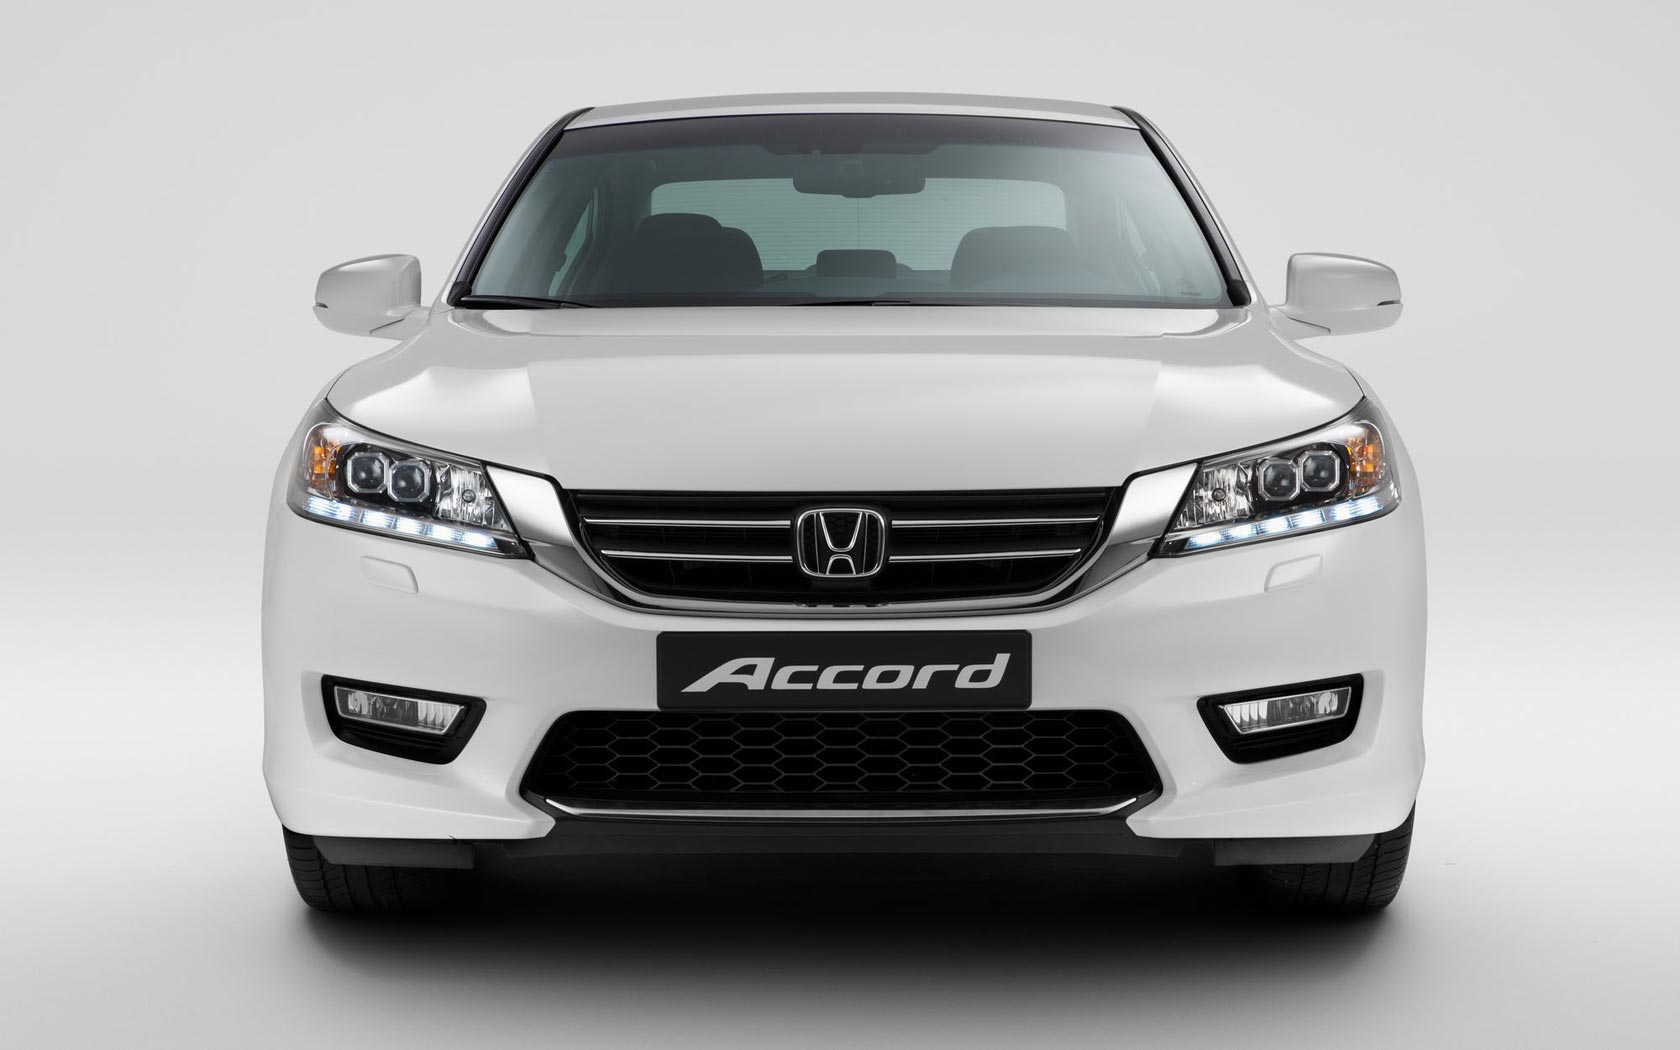  Honda Accord (2012-2015)